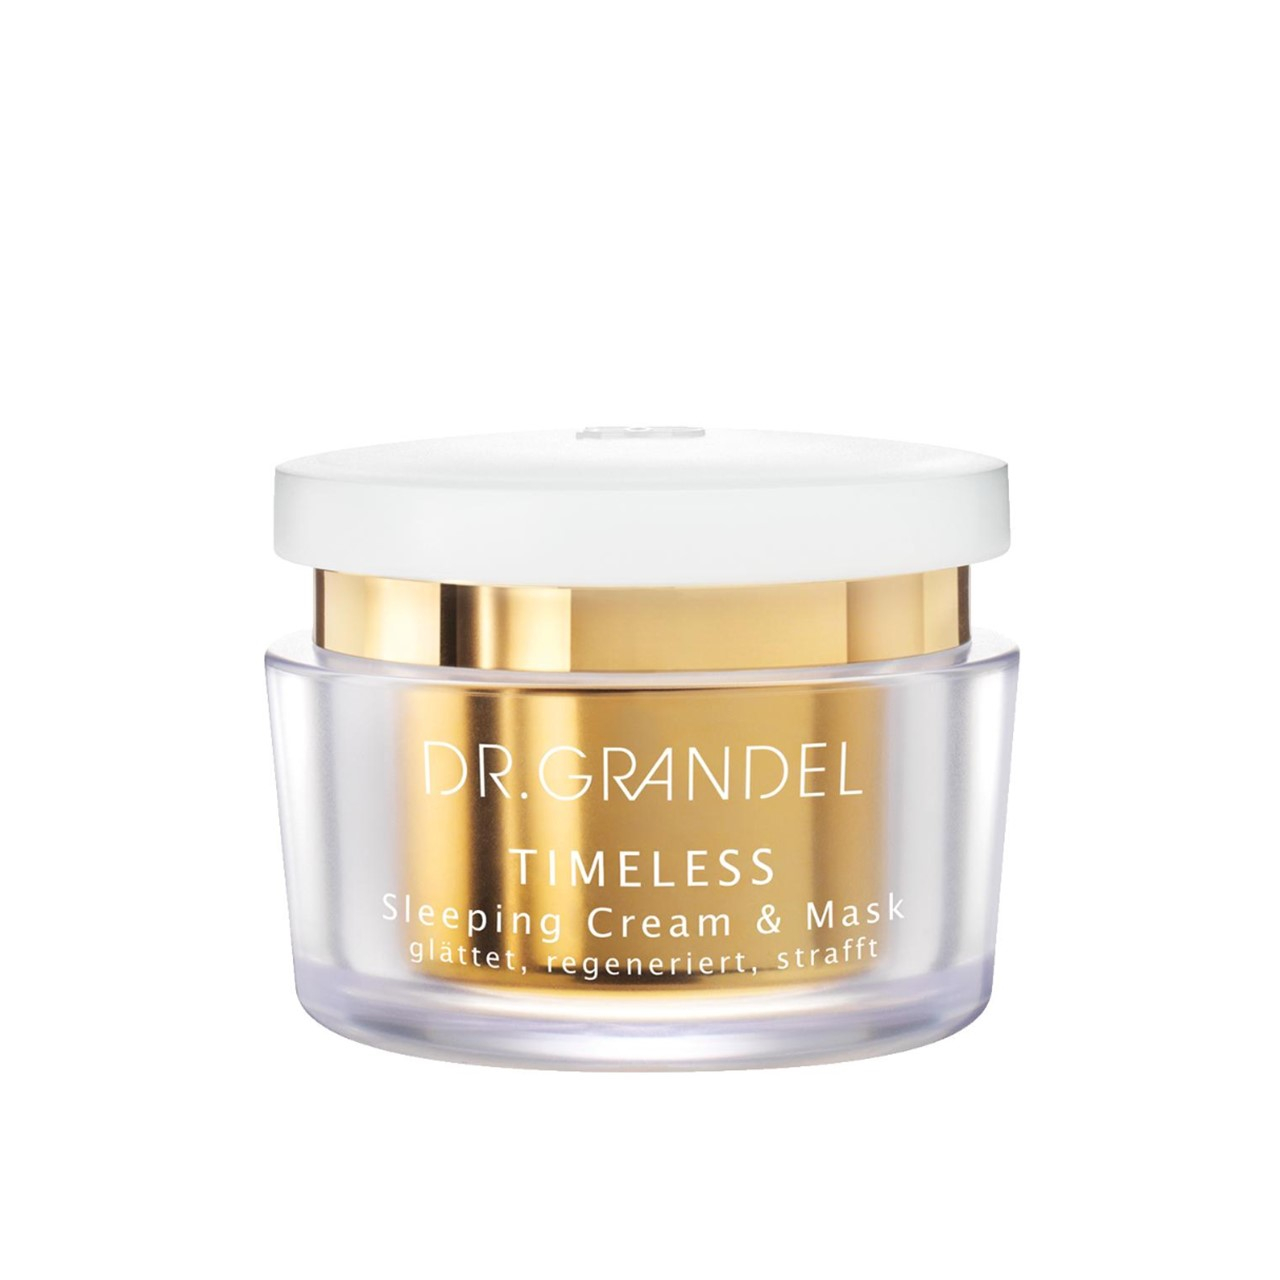 DR. GRANDEL Timeless Sleeping Cream & Mask 50ml (1.69fl oz)